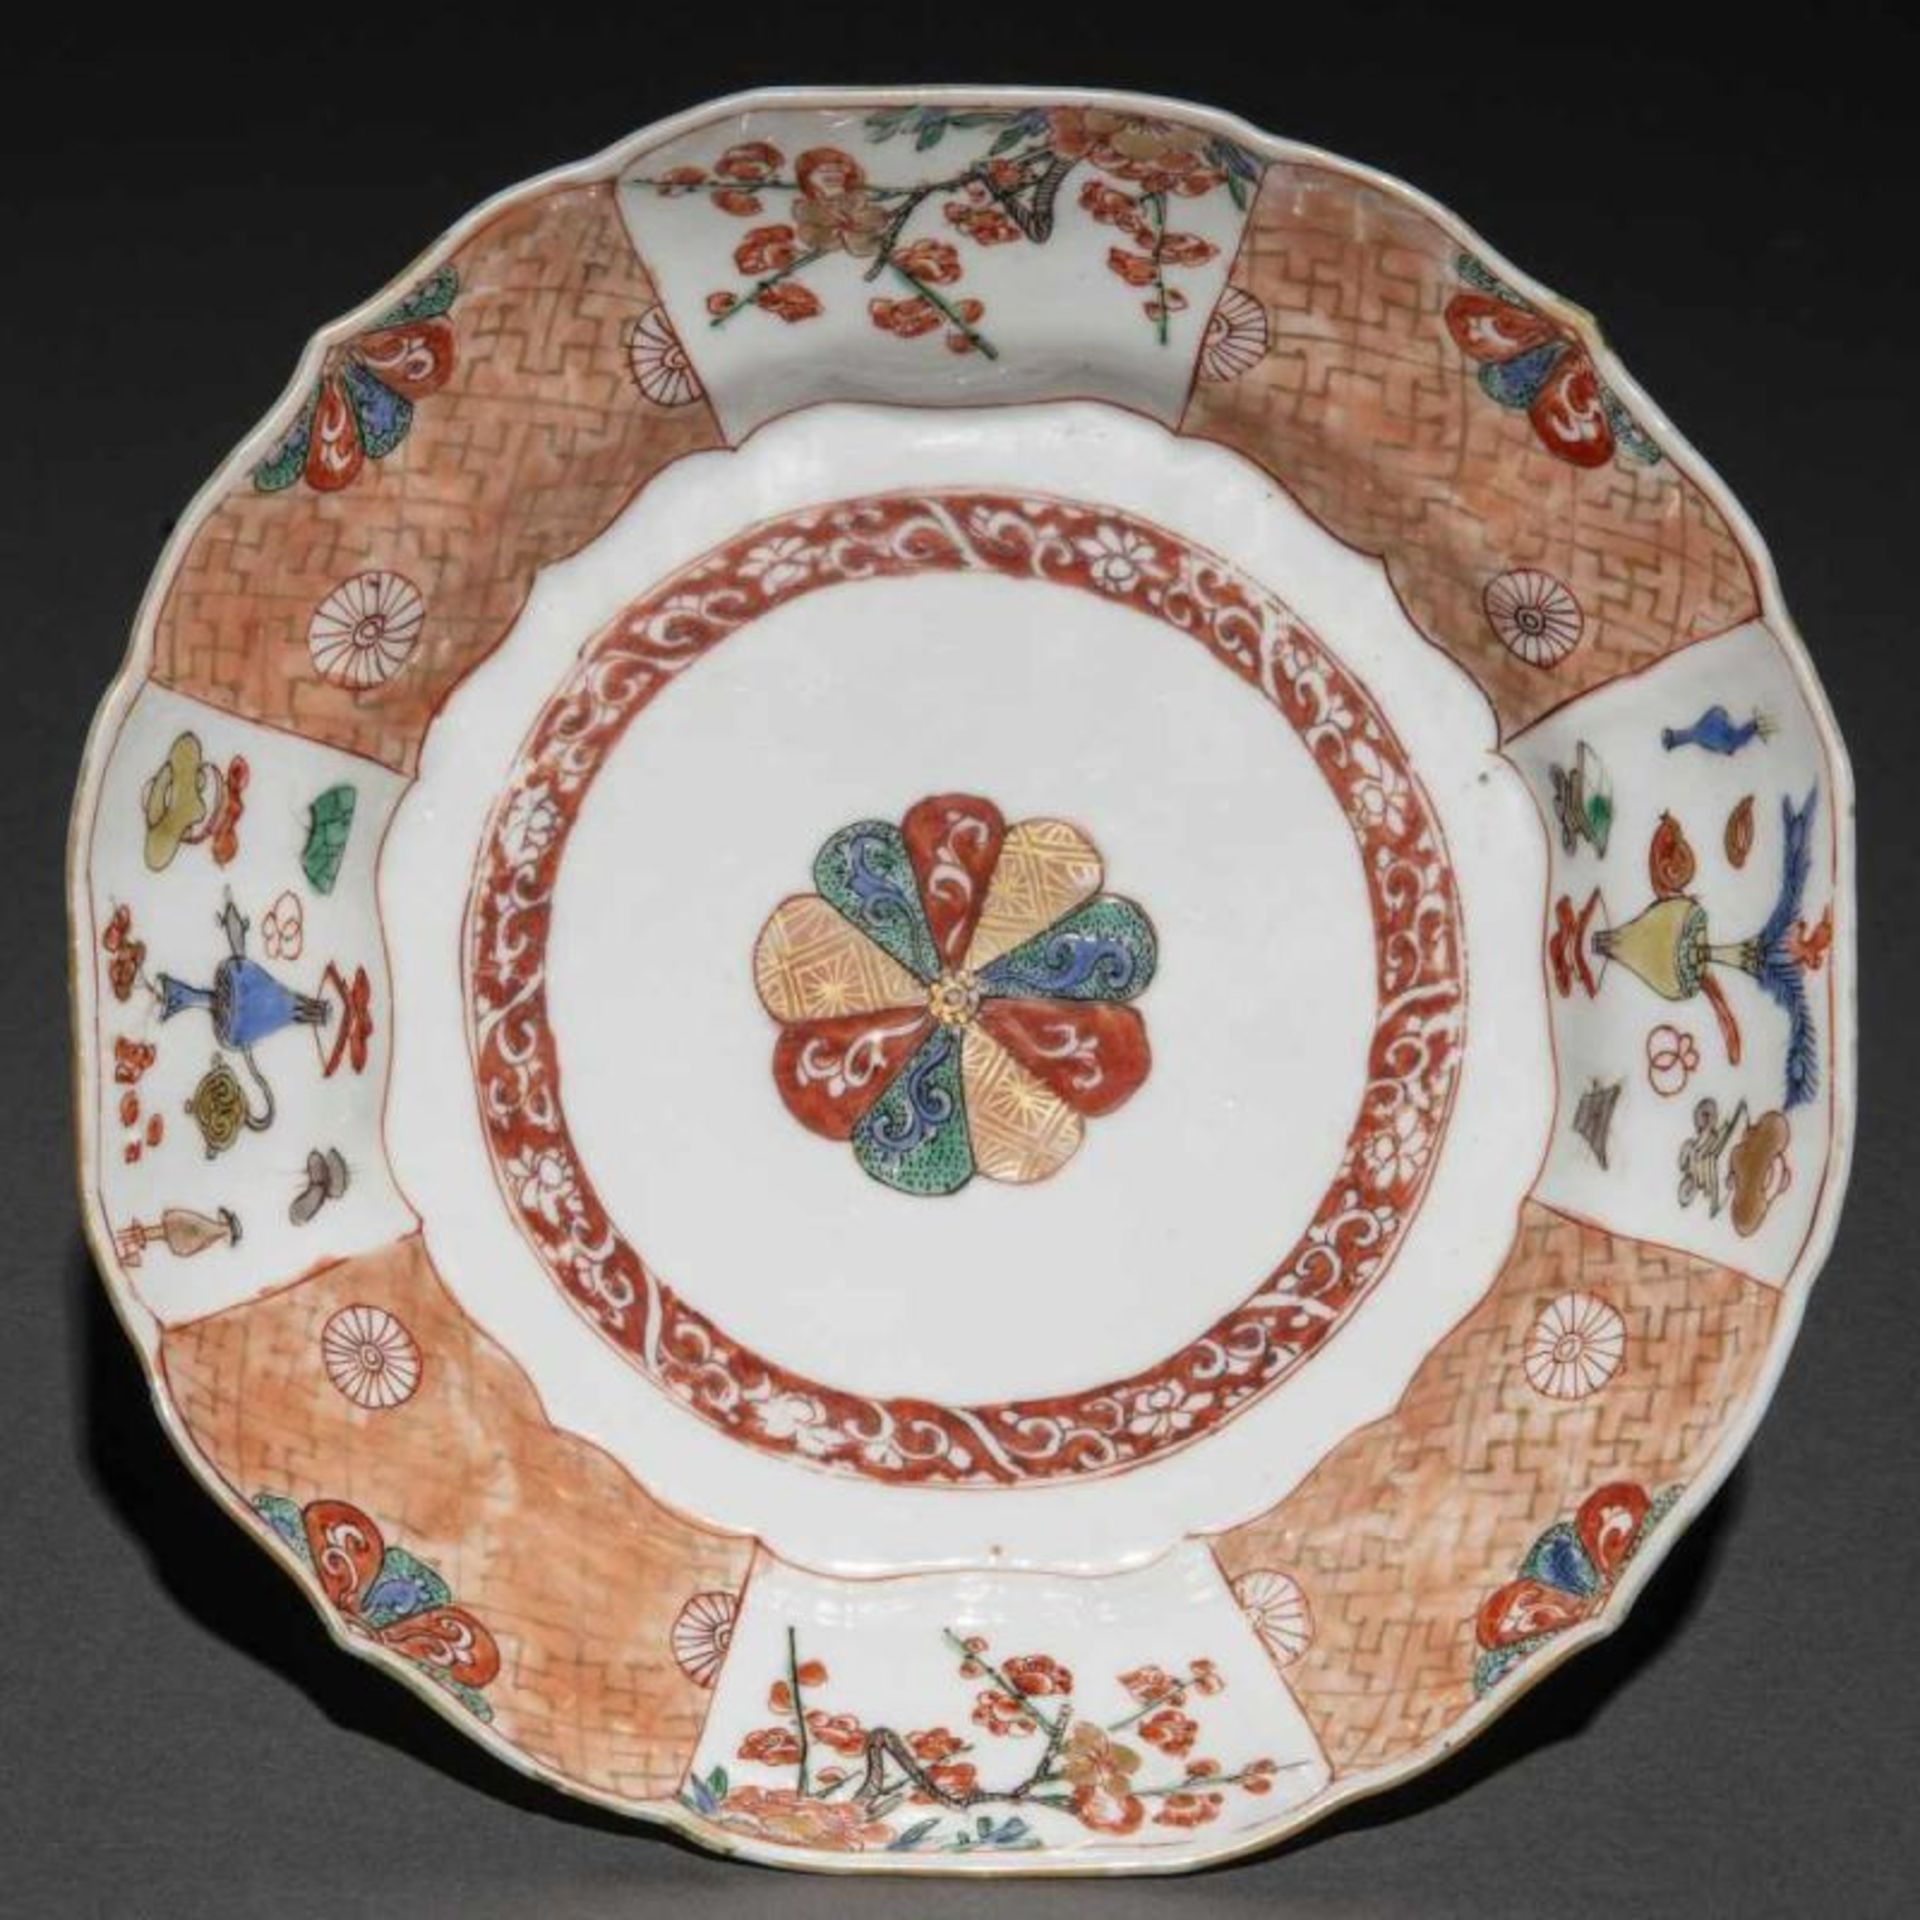 Plato en porcelana Imari, Siglo XIXPresenta borde de perfil mixtilíneo decorado con motivos